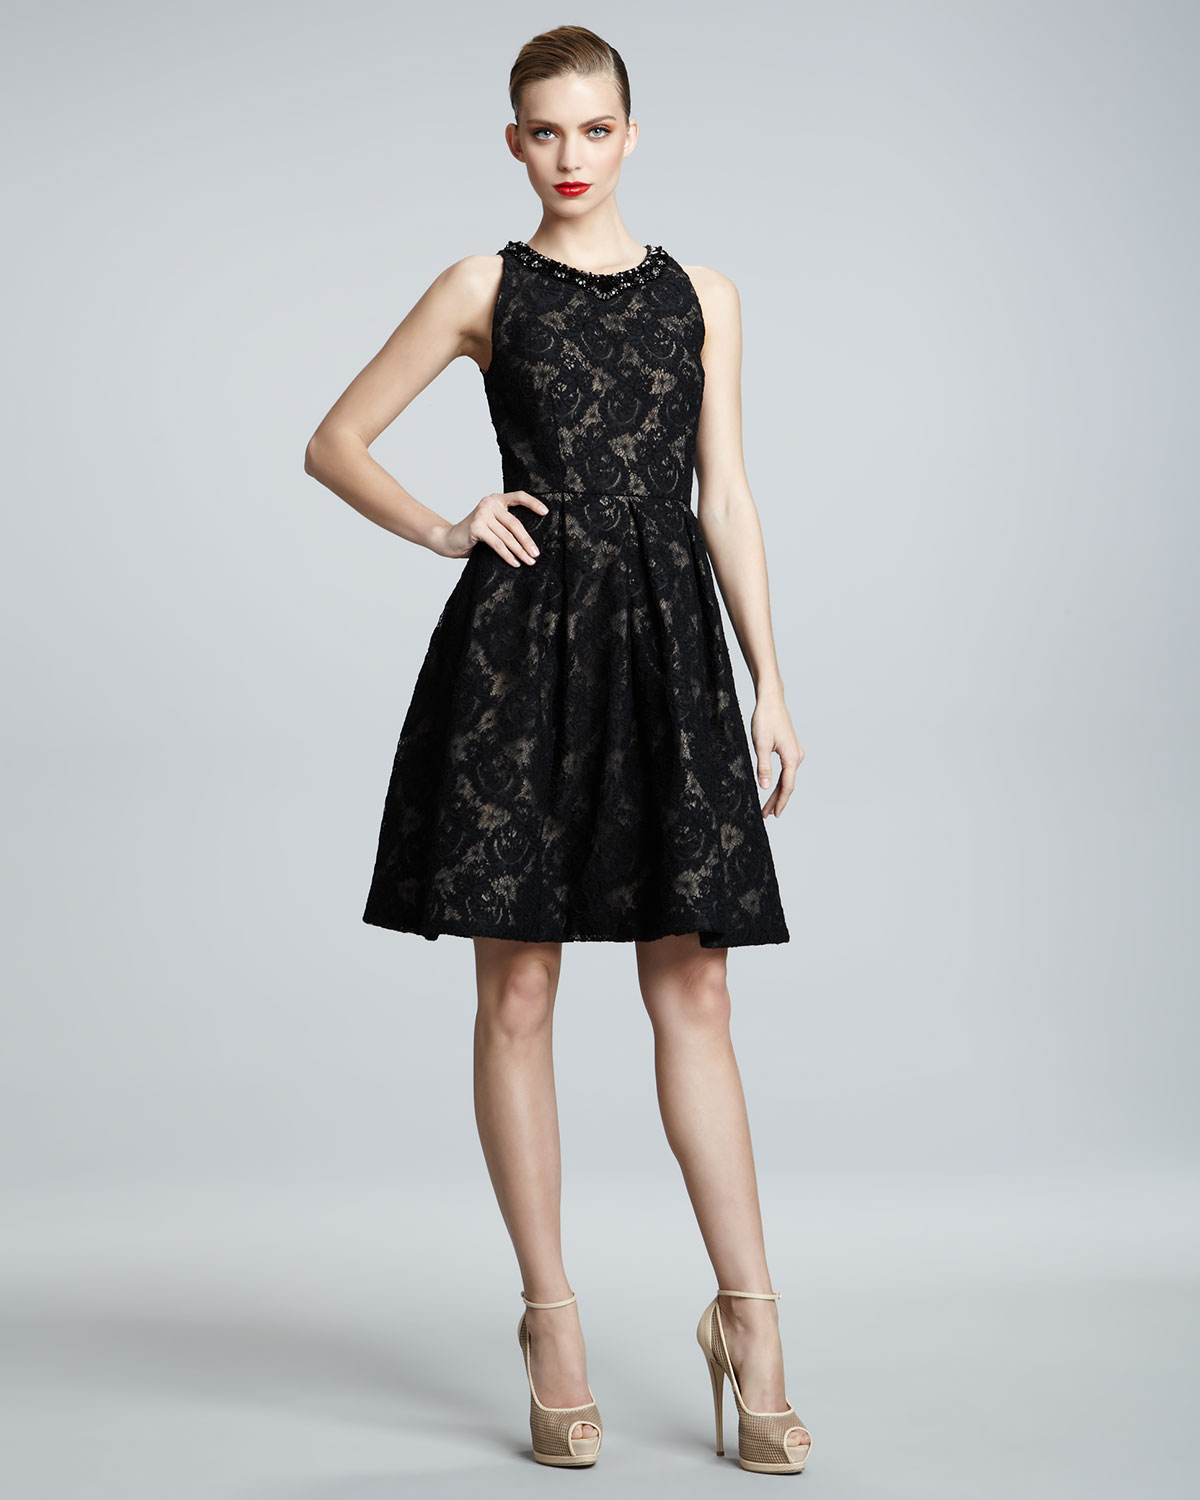 Lyst - David Meister Jewel-neck Lace Dress in Black